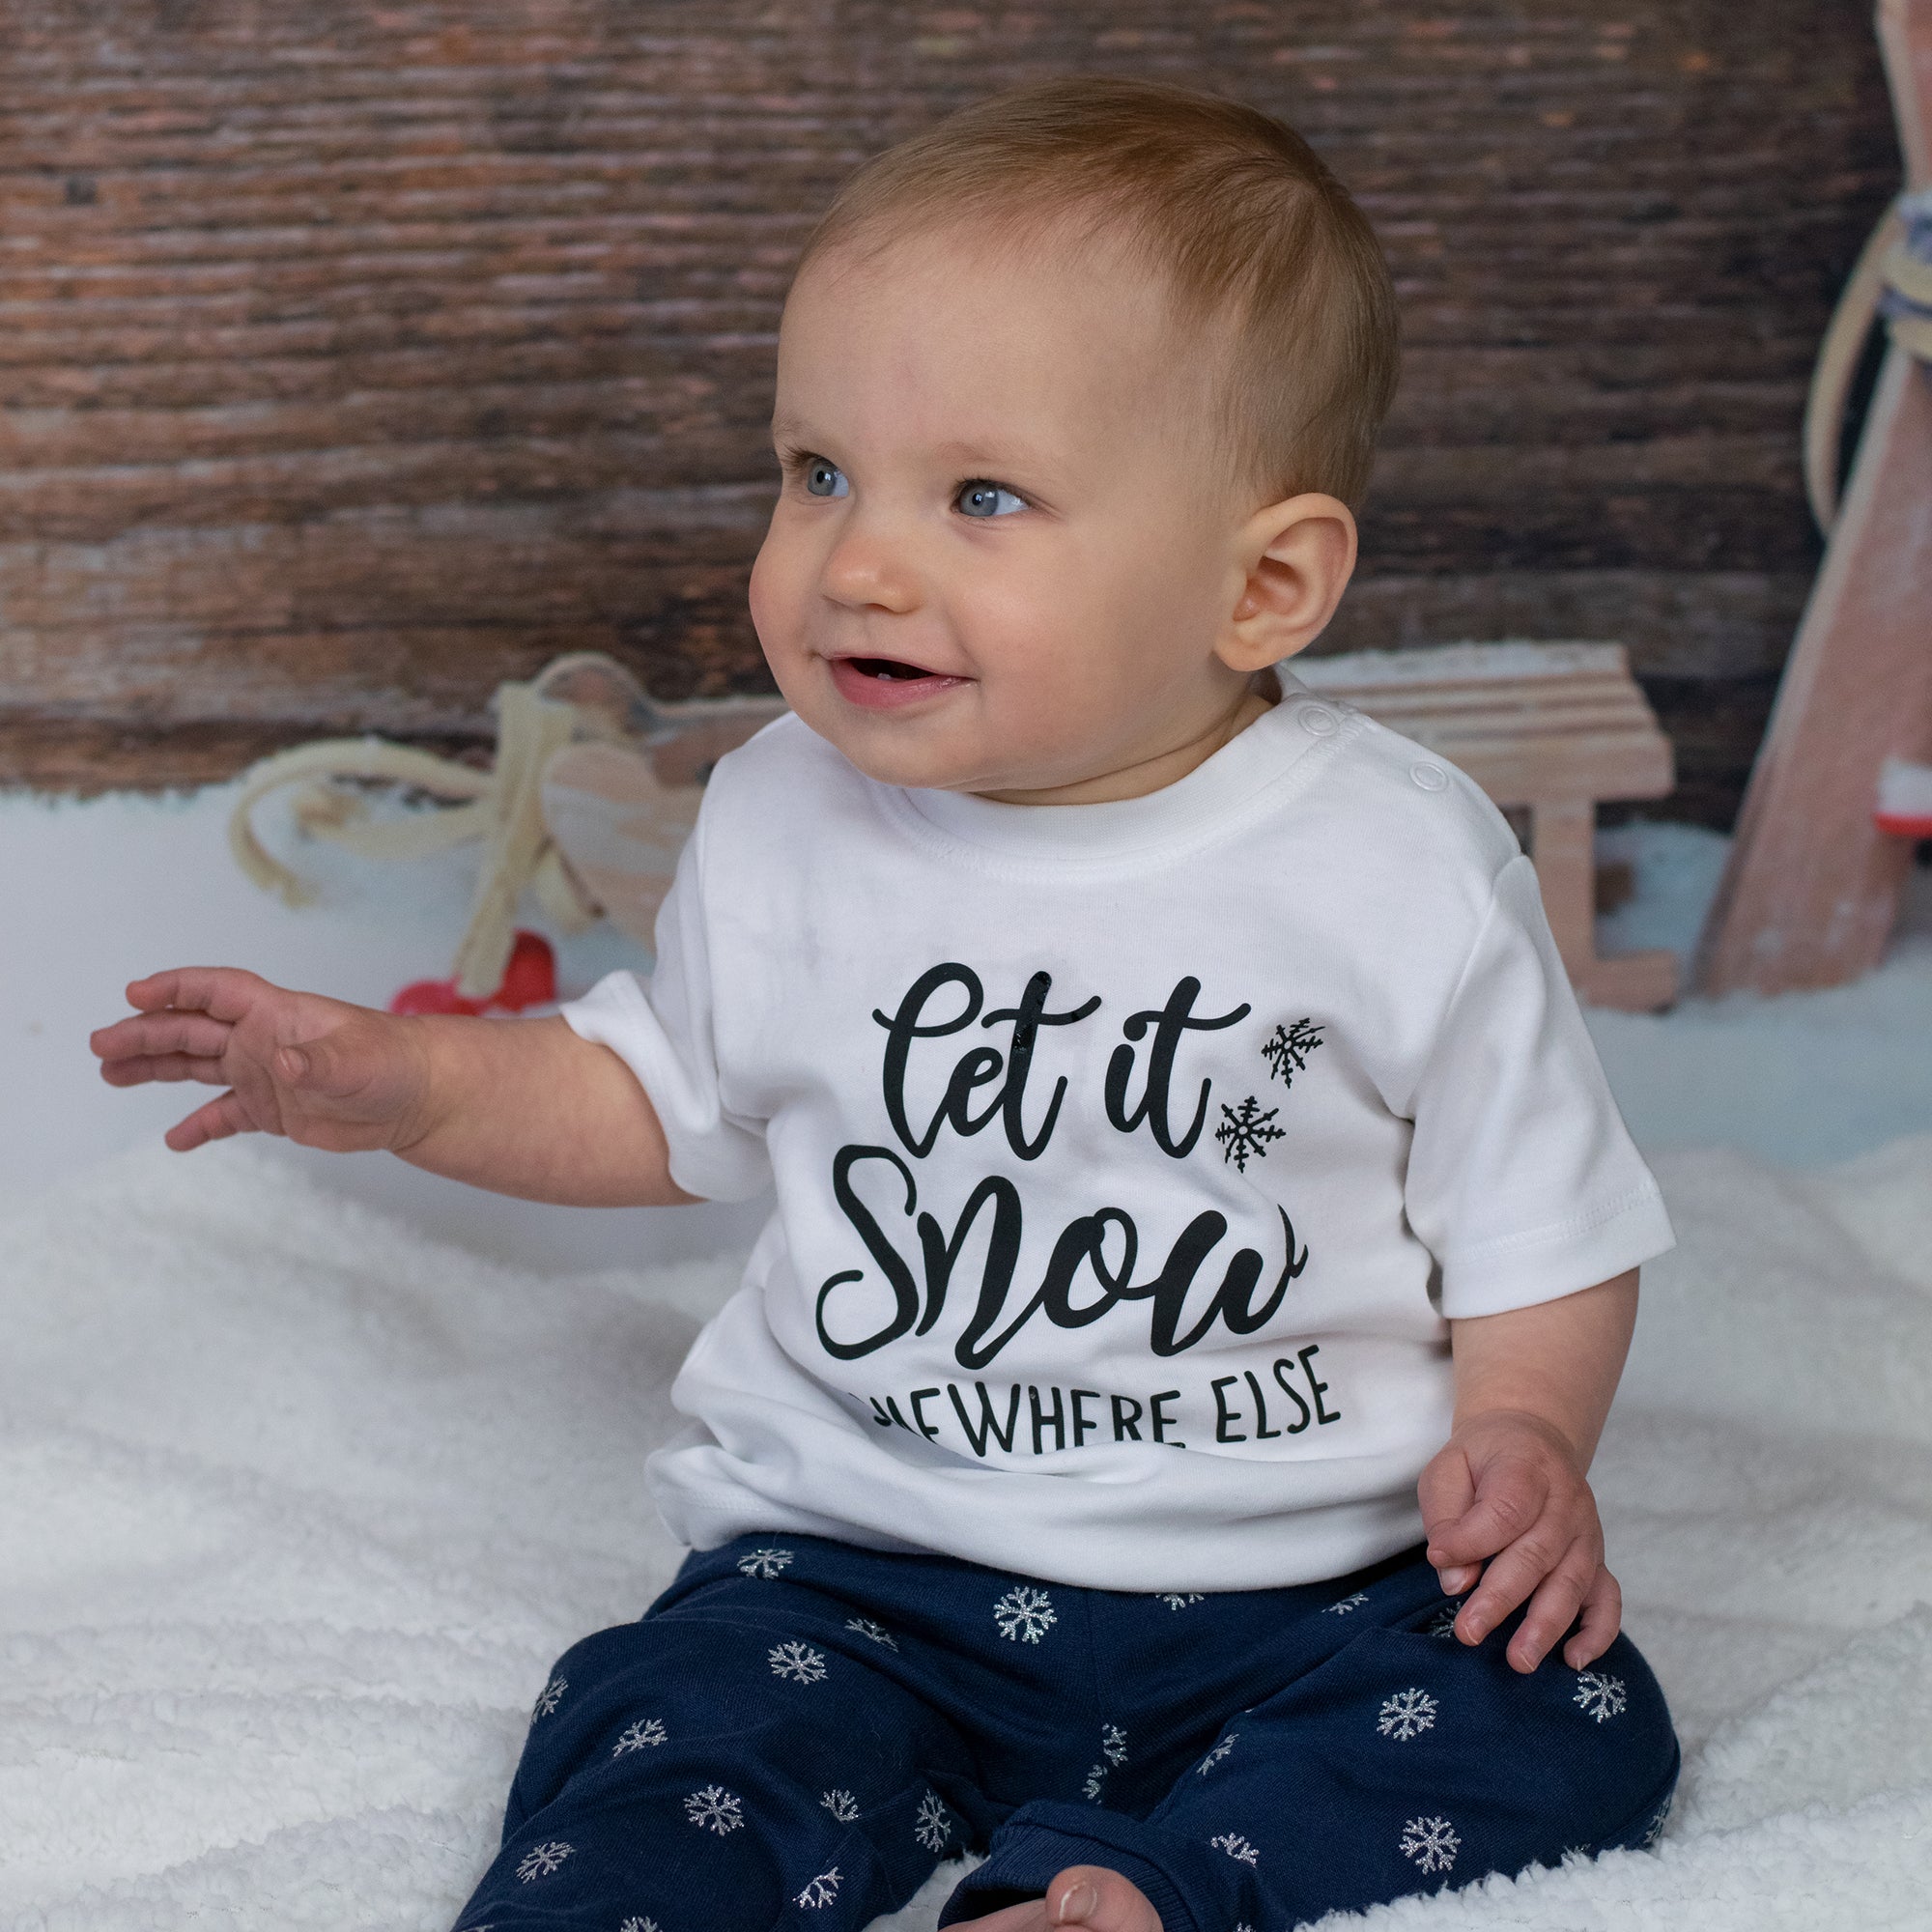 'Let it snow - somewhere else' baby shortsleeve shirt